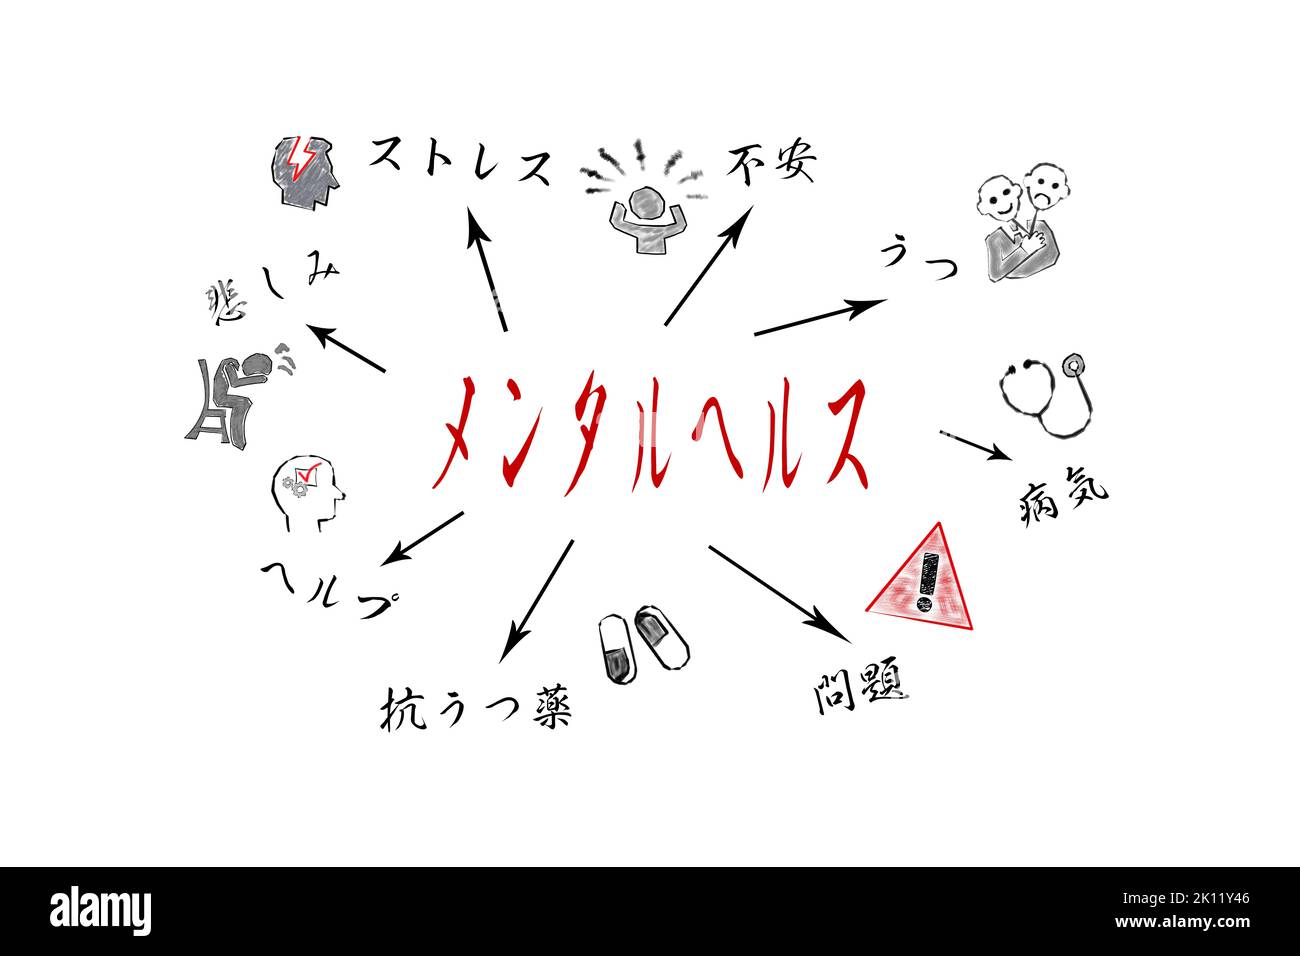 In Japanese Mental Health. Sadness Stress Anxiety Depression Illness Problem Antidepressant Help. Illustration. Stock Photo